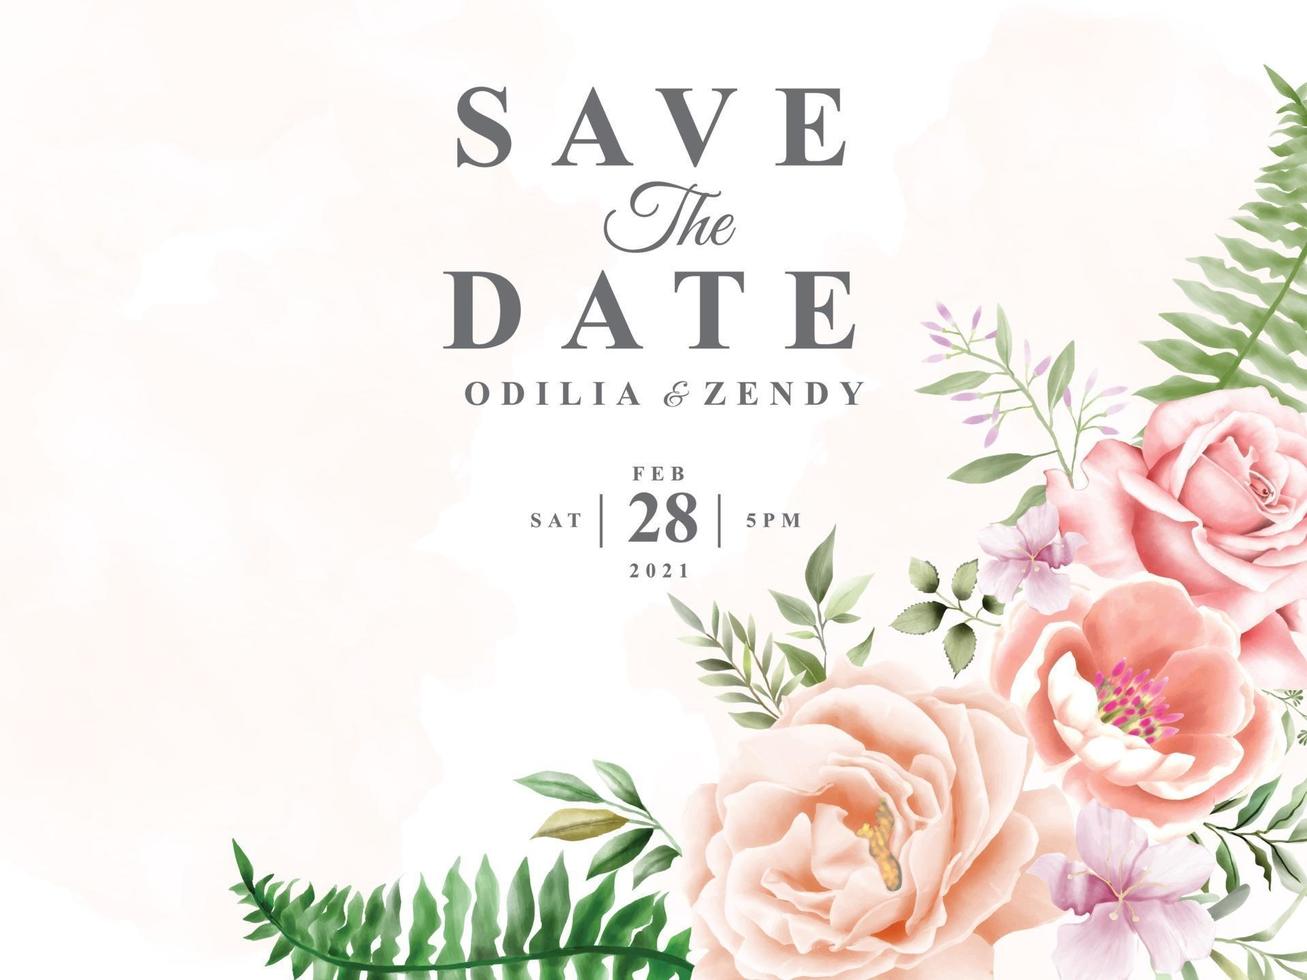 beautiful and elegant floral wedding invitation card templates vector